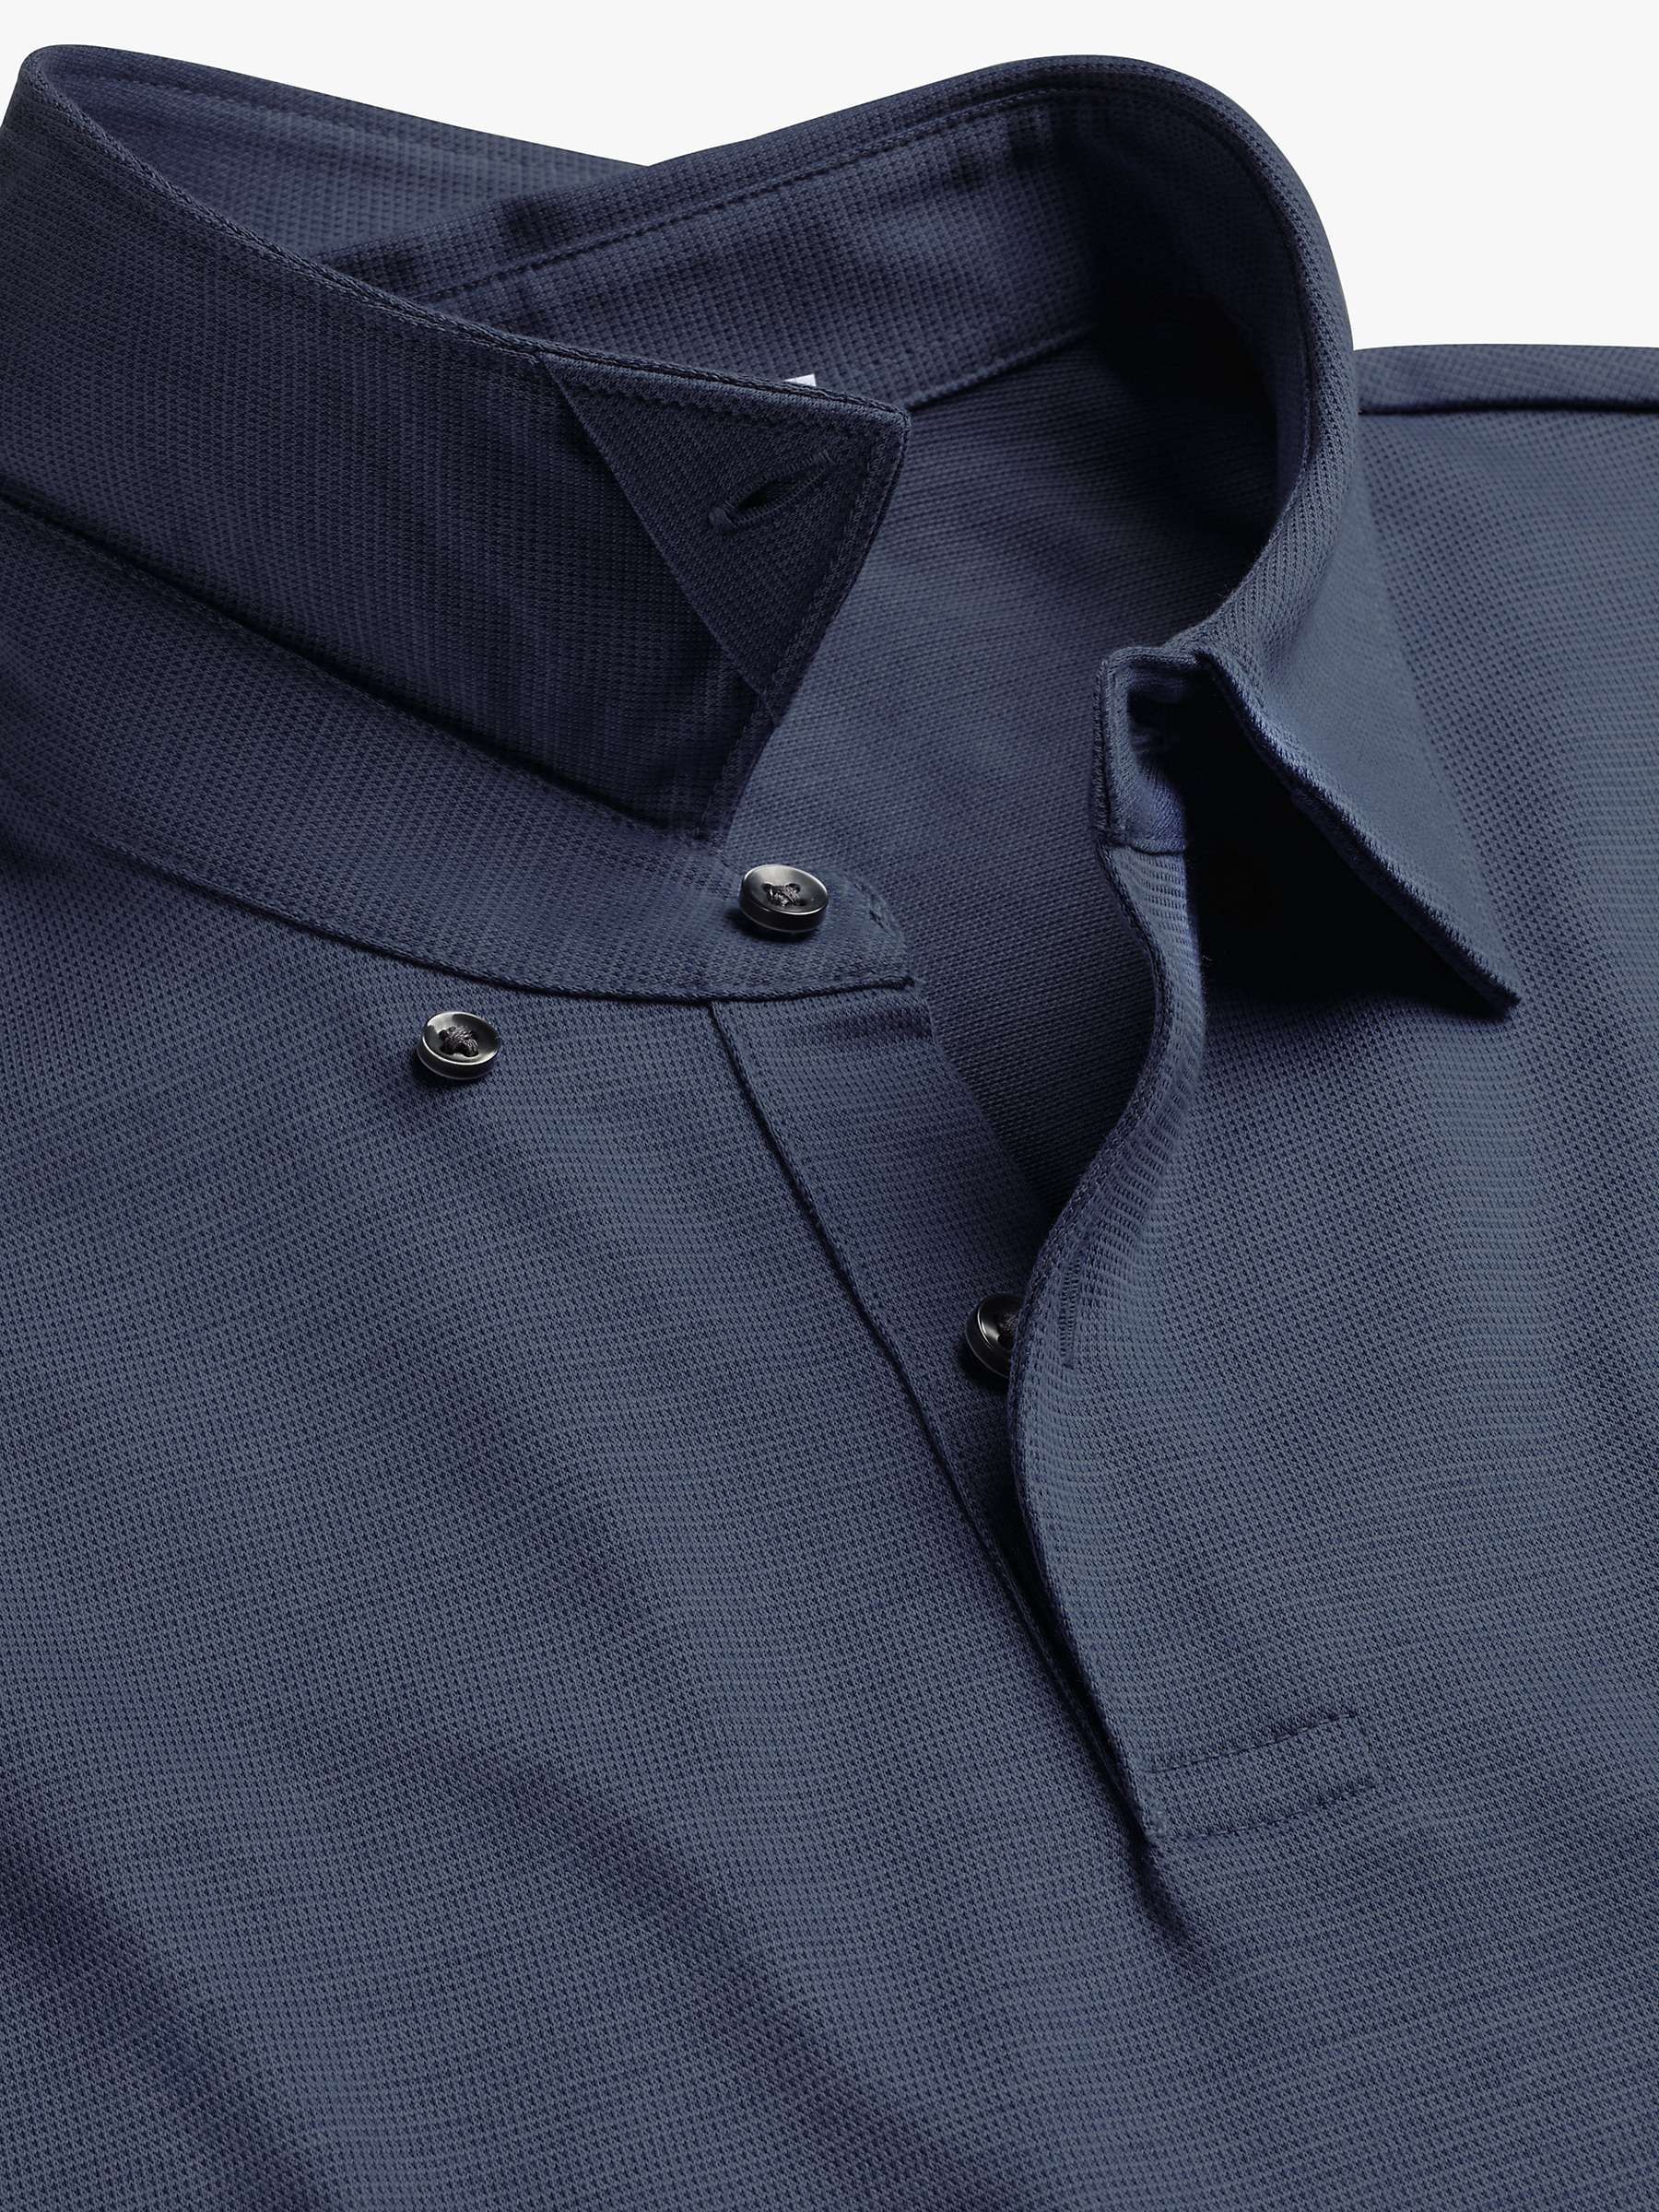 Buy Charles Tyrwhitt Cotton Blend Cool Polo Shirt, Steel Blue Online at johnlewis.com